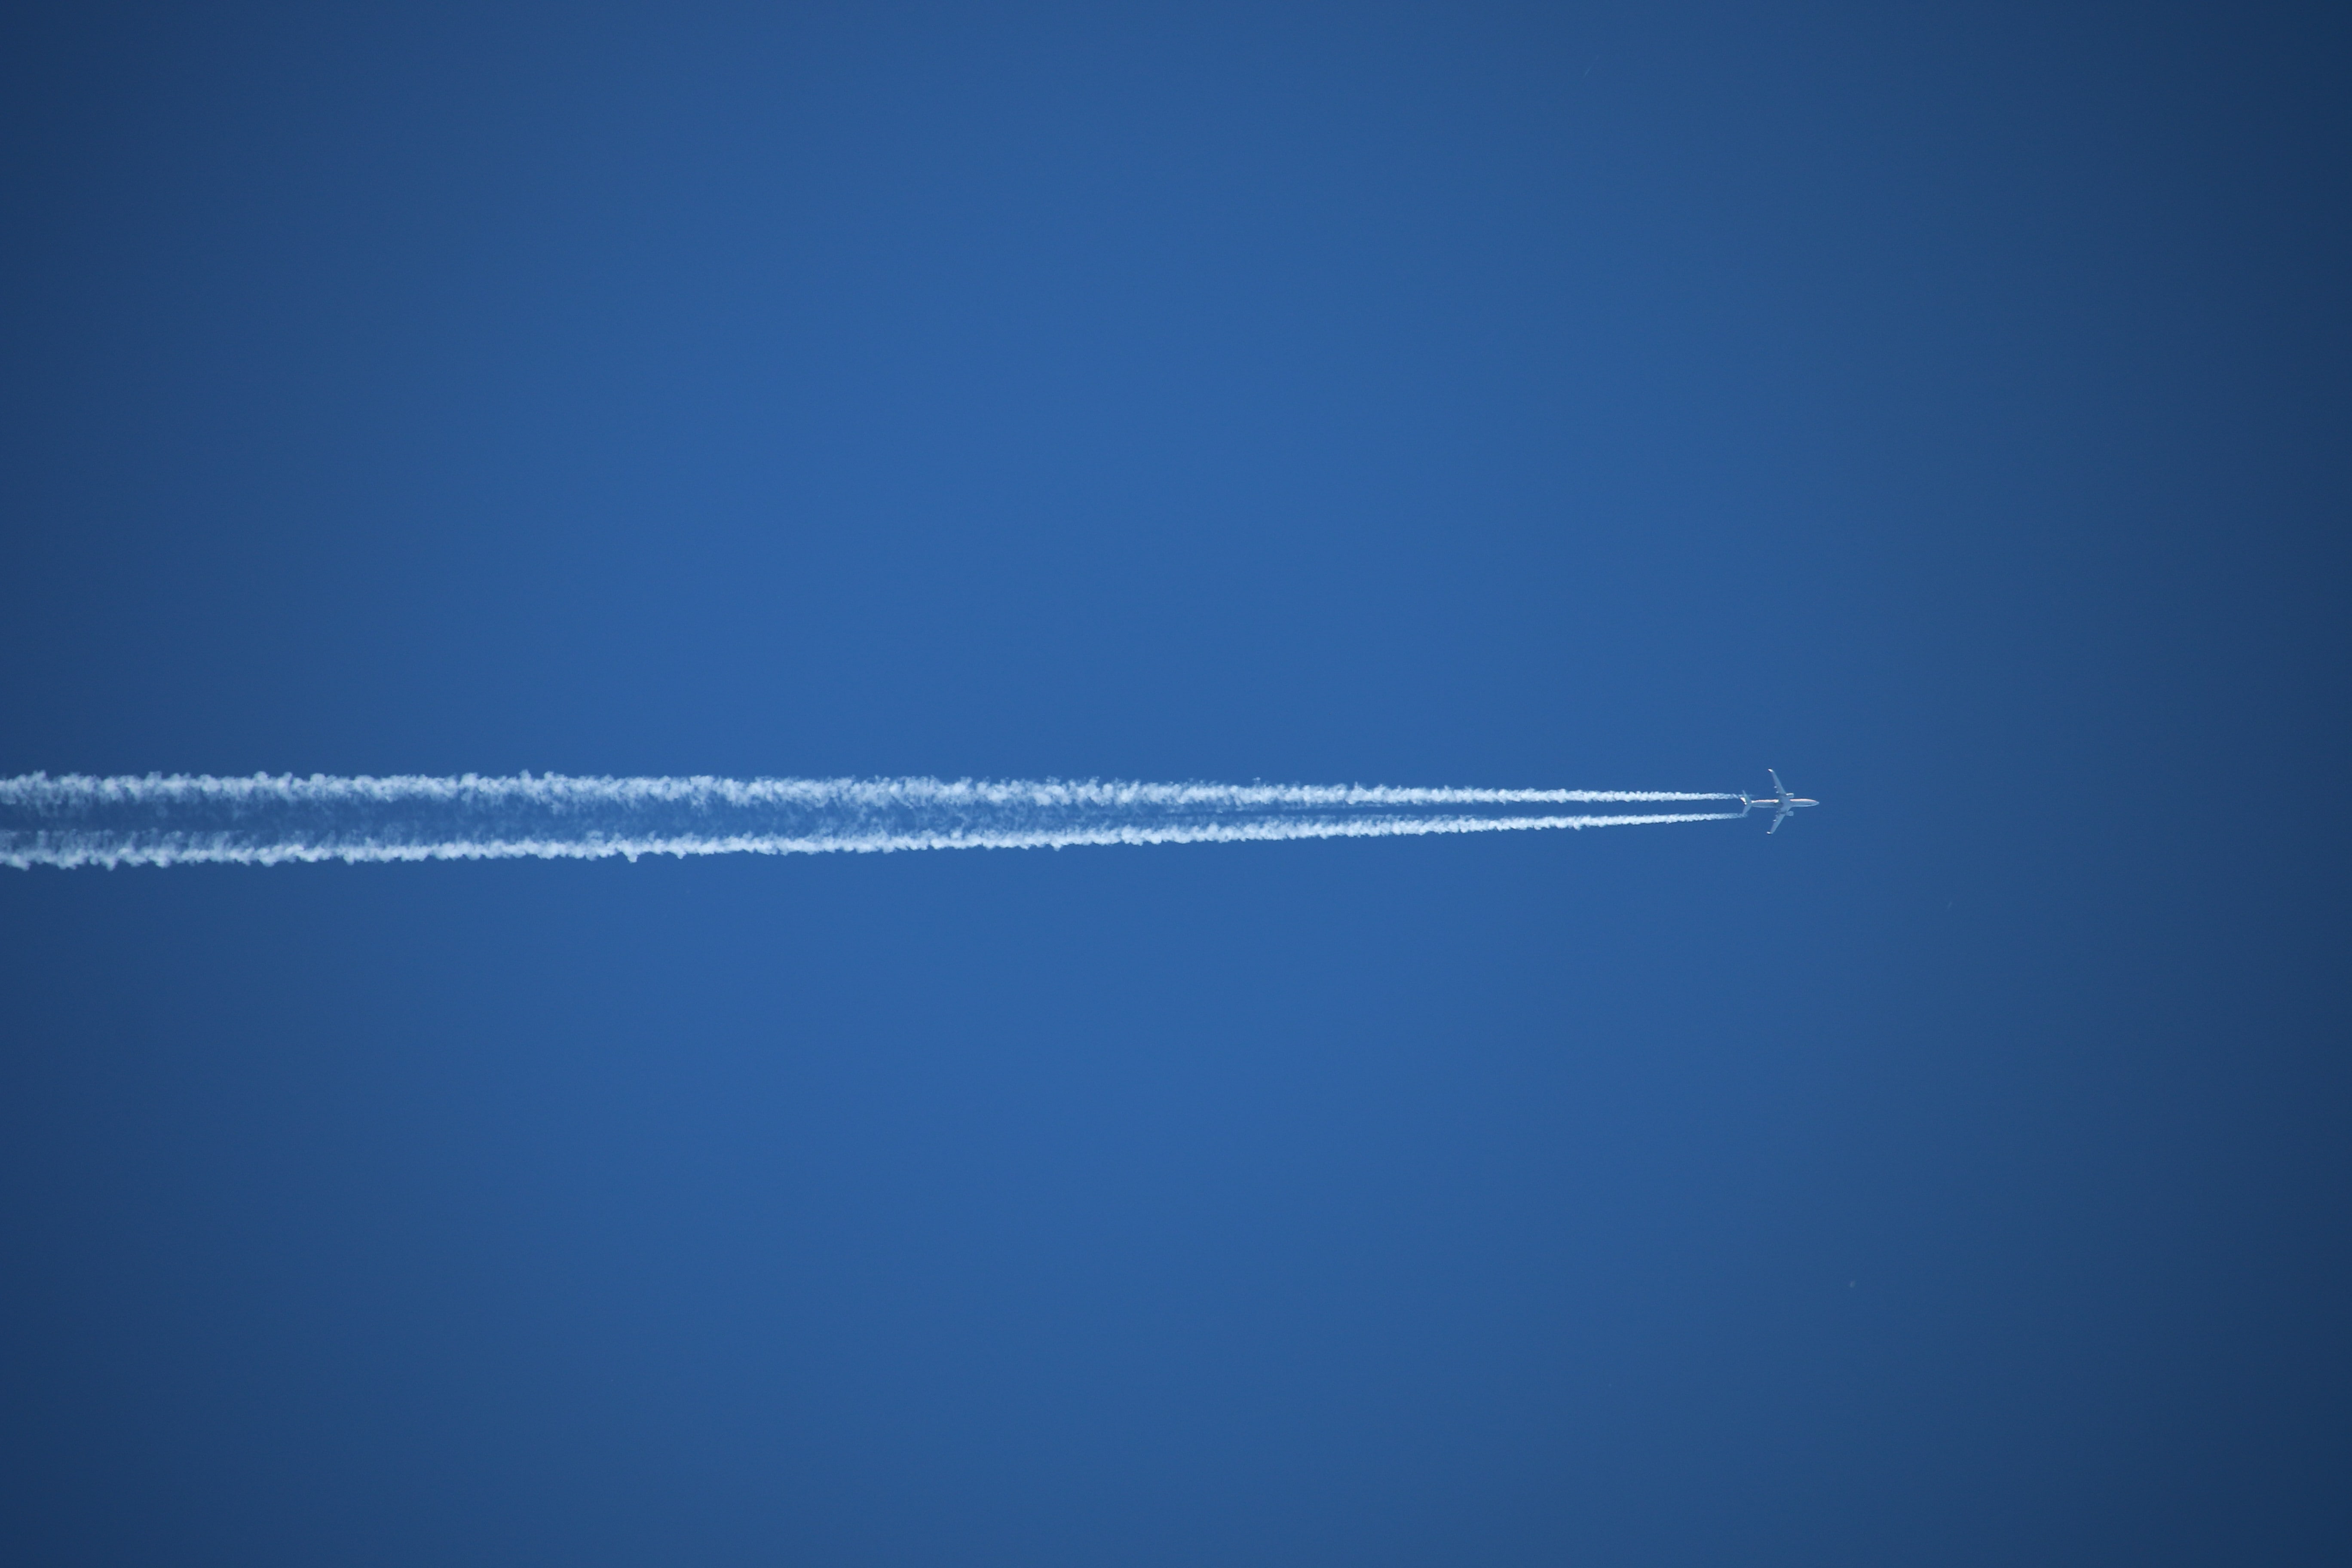 737, aircraft, passenger aircraft, sky, vapor trail, airplane